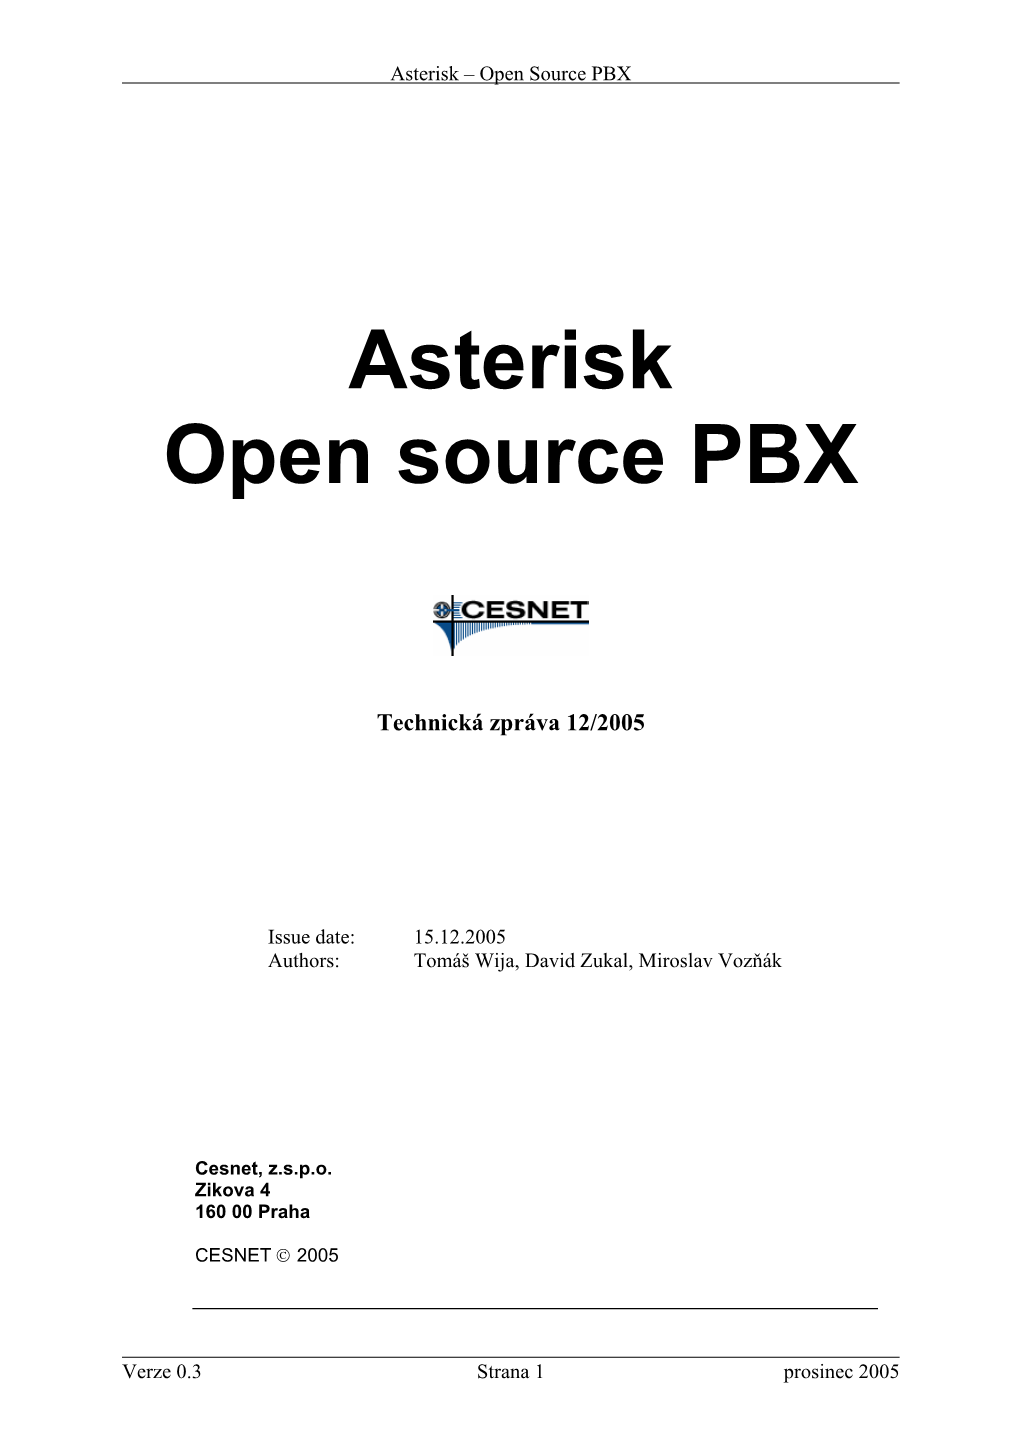 Asterisk Open Source PBX